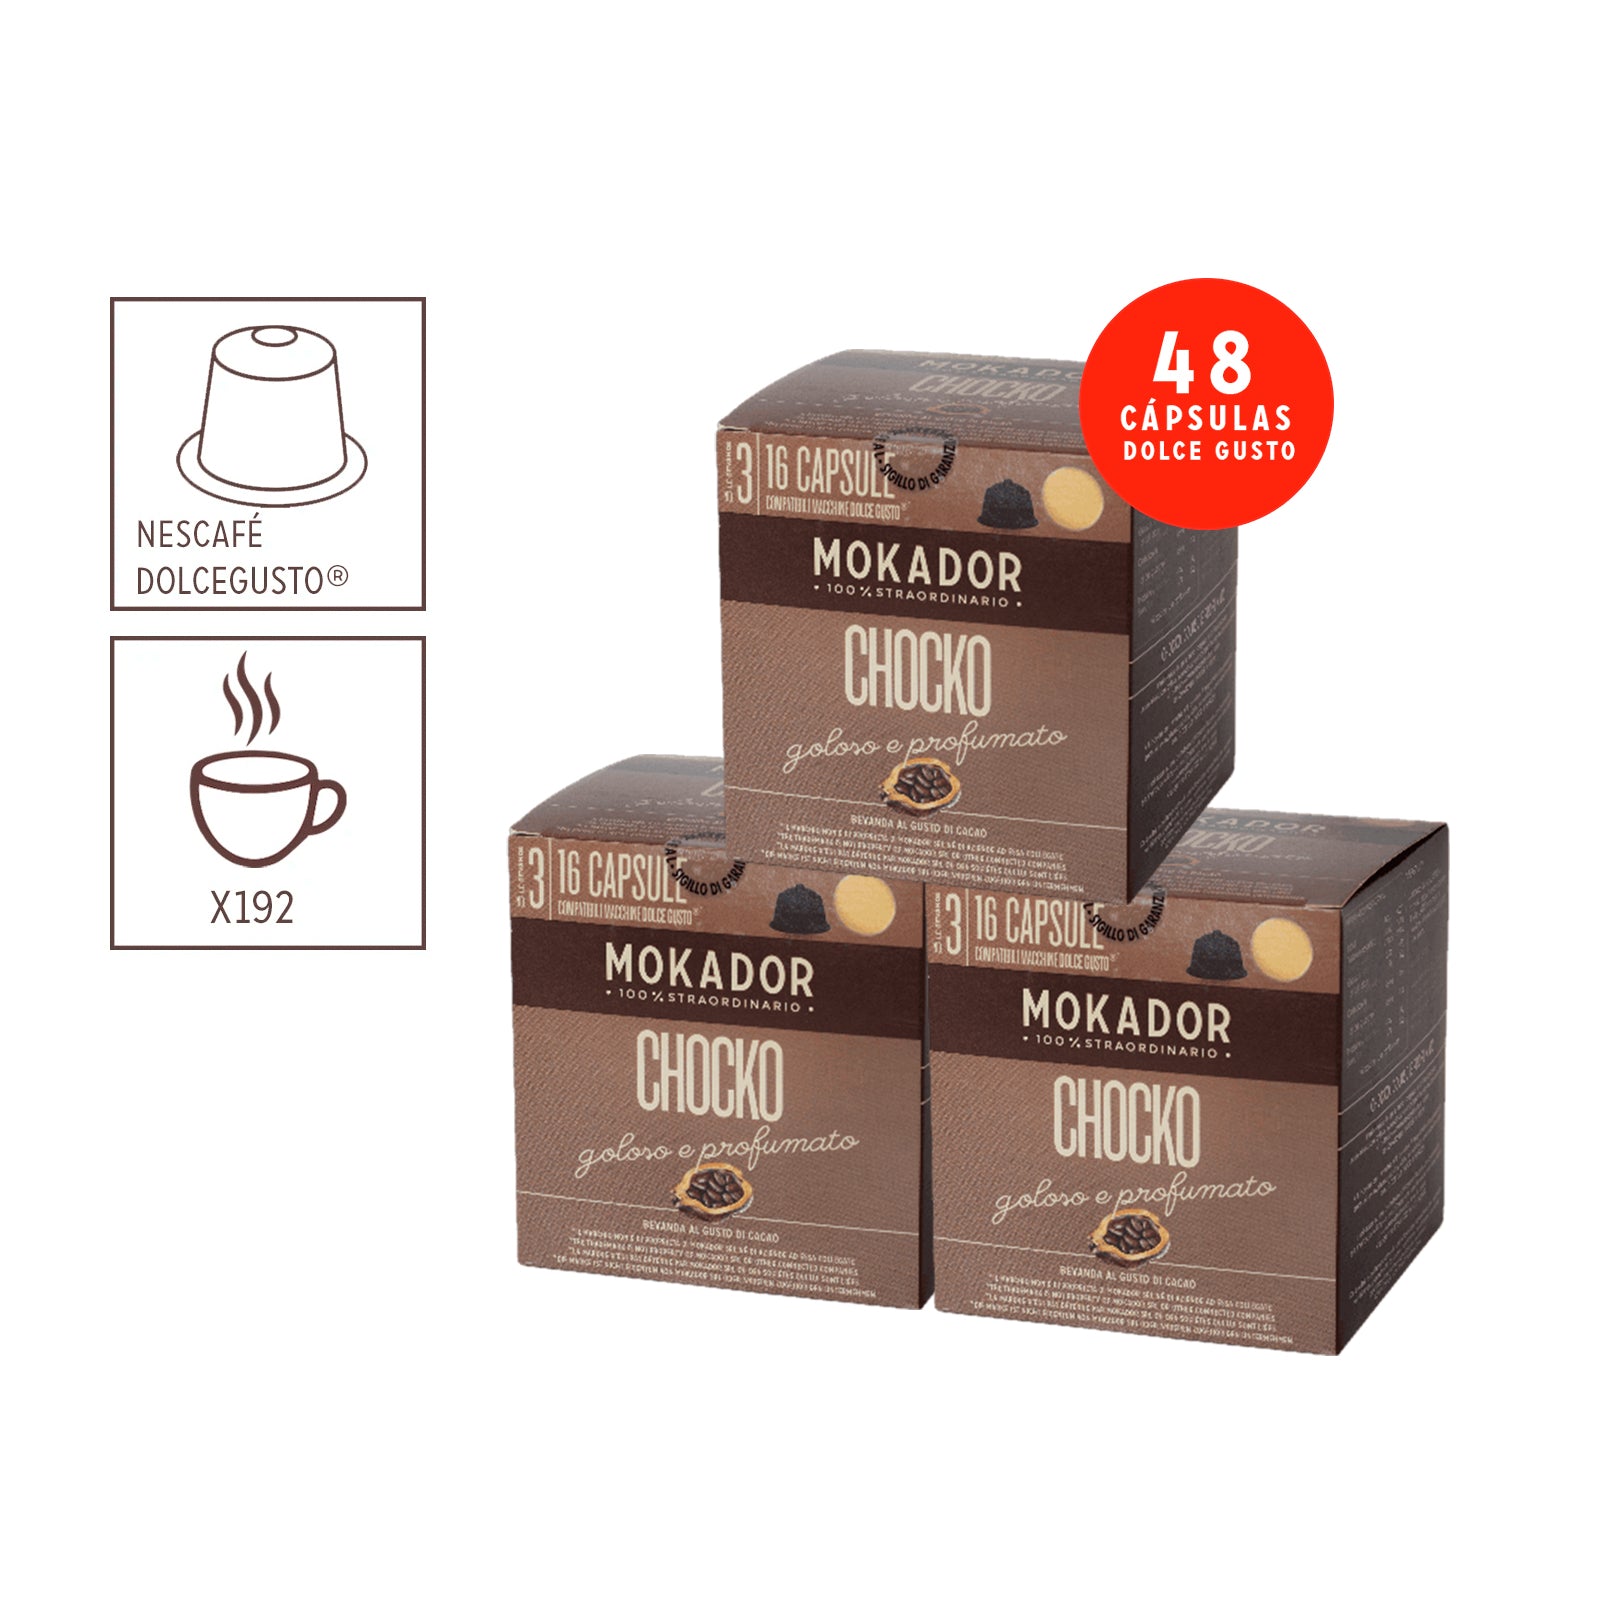 PACK 48 Cápsulas compatible con Dolce Gusto ® - Chocko – Mokador 100%  STRAORDINARIO